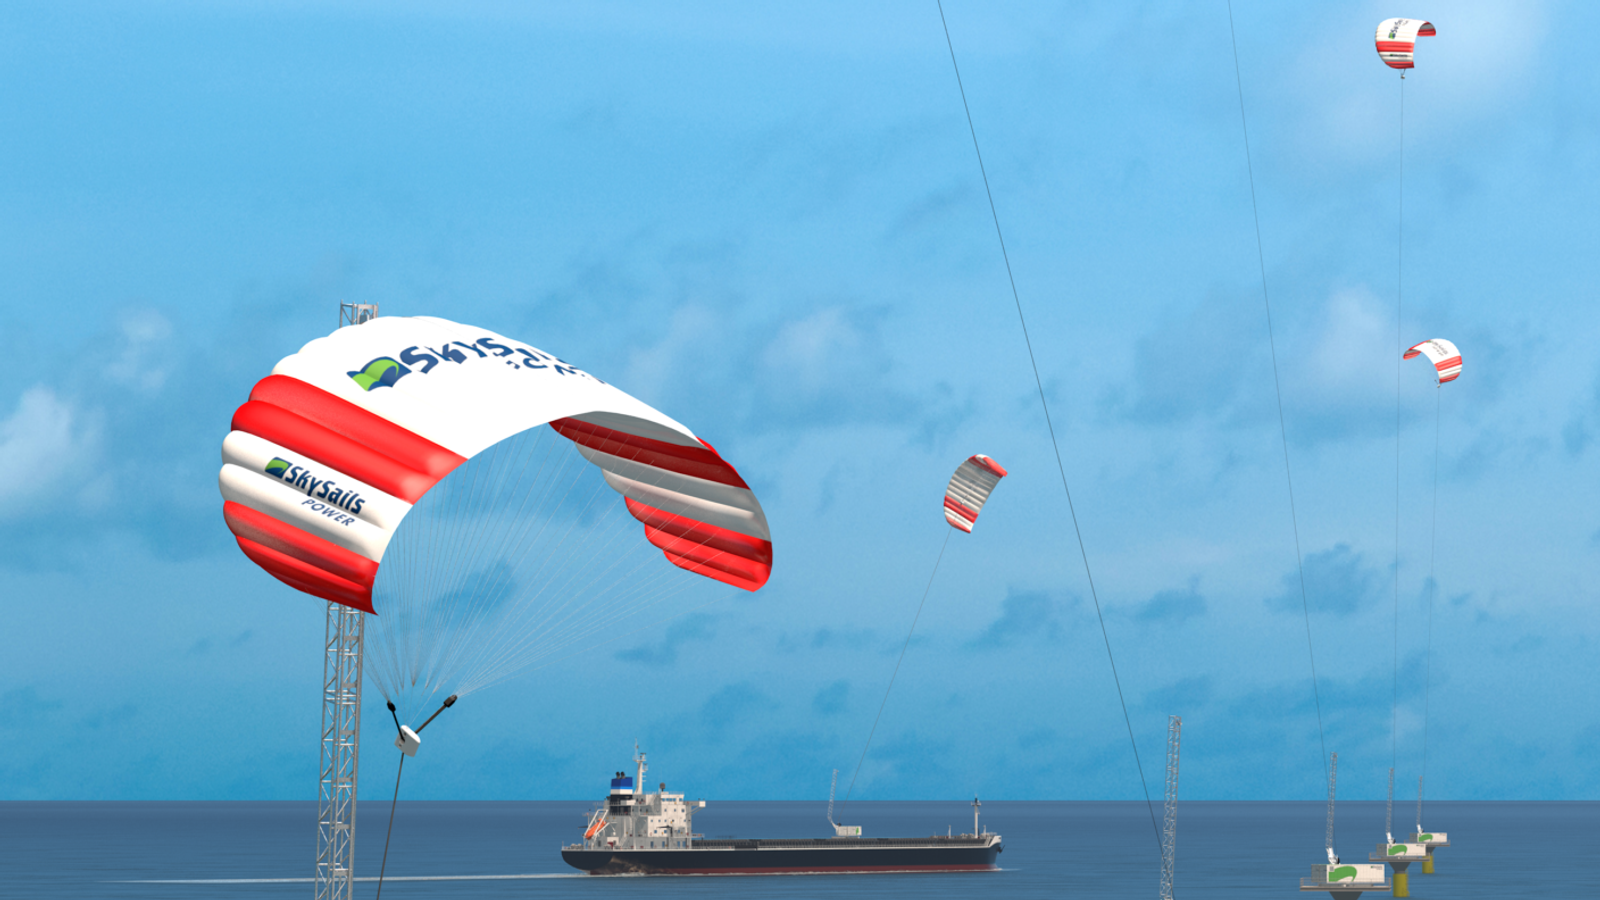 The kites seeking the world's surest winds